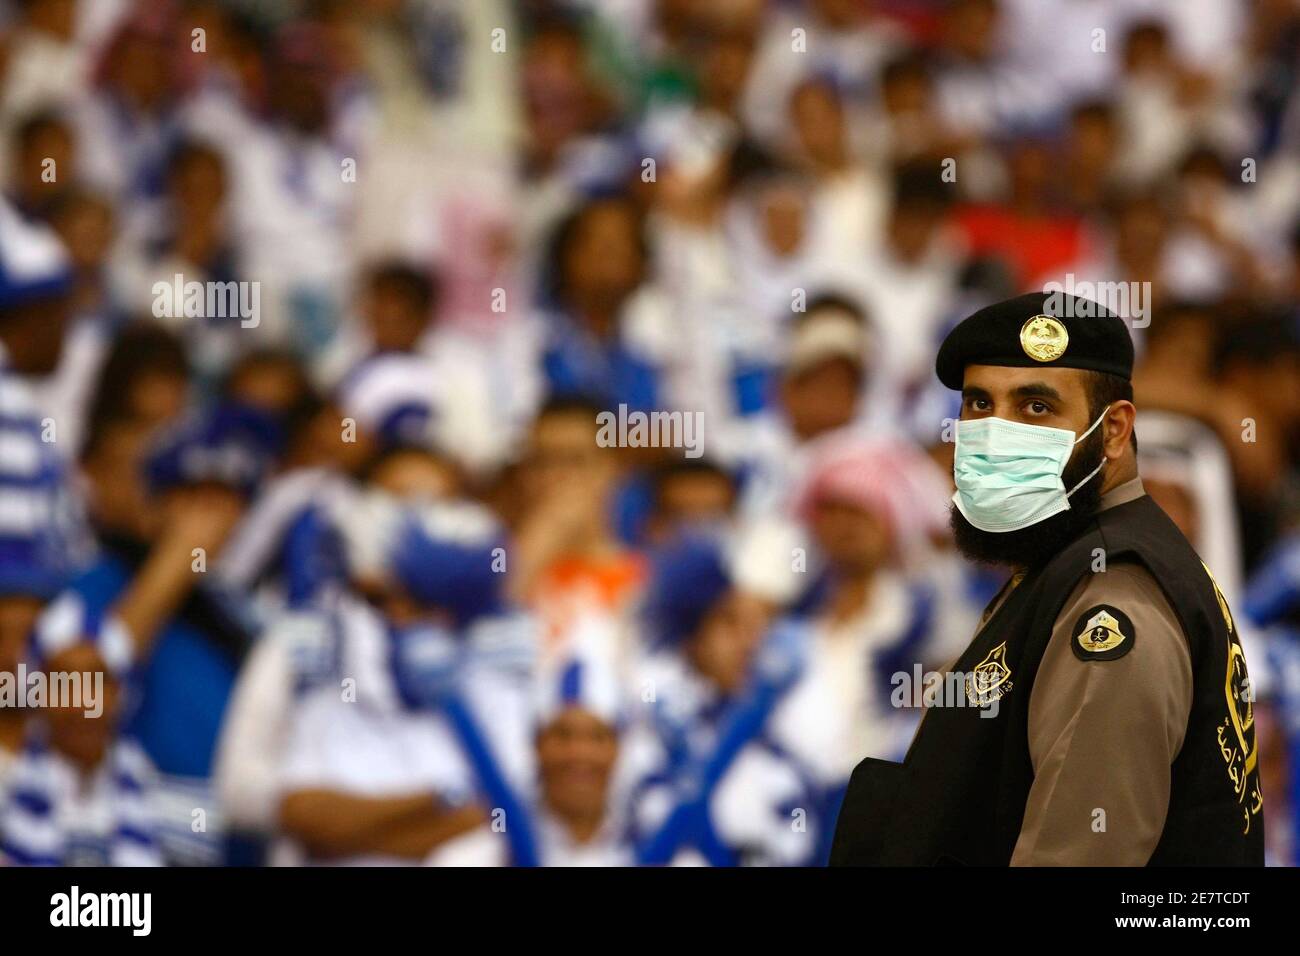 A security guard keep watch during the Saudi league championship soccer match between Al Hilal and Al Itihad  in Riyadh April 12, 2009.    REUTERS/Fahad Shadeed (SAUDI ARABIA SPORT SOCCER) Stock Photo